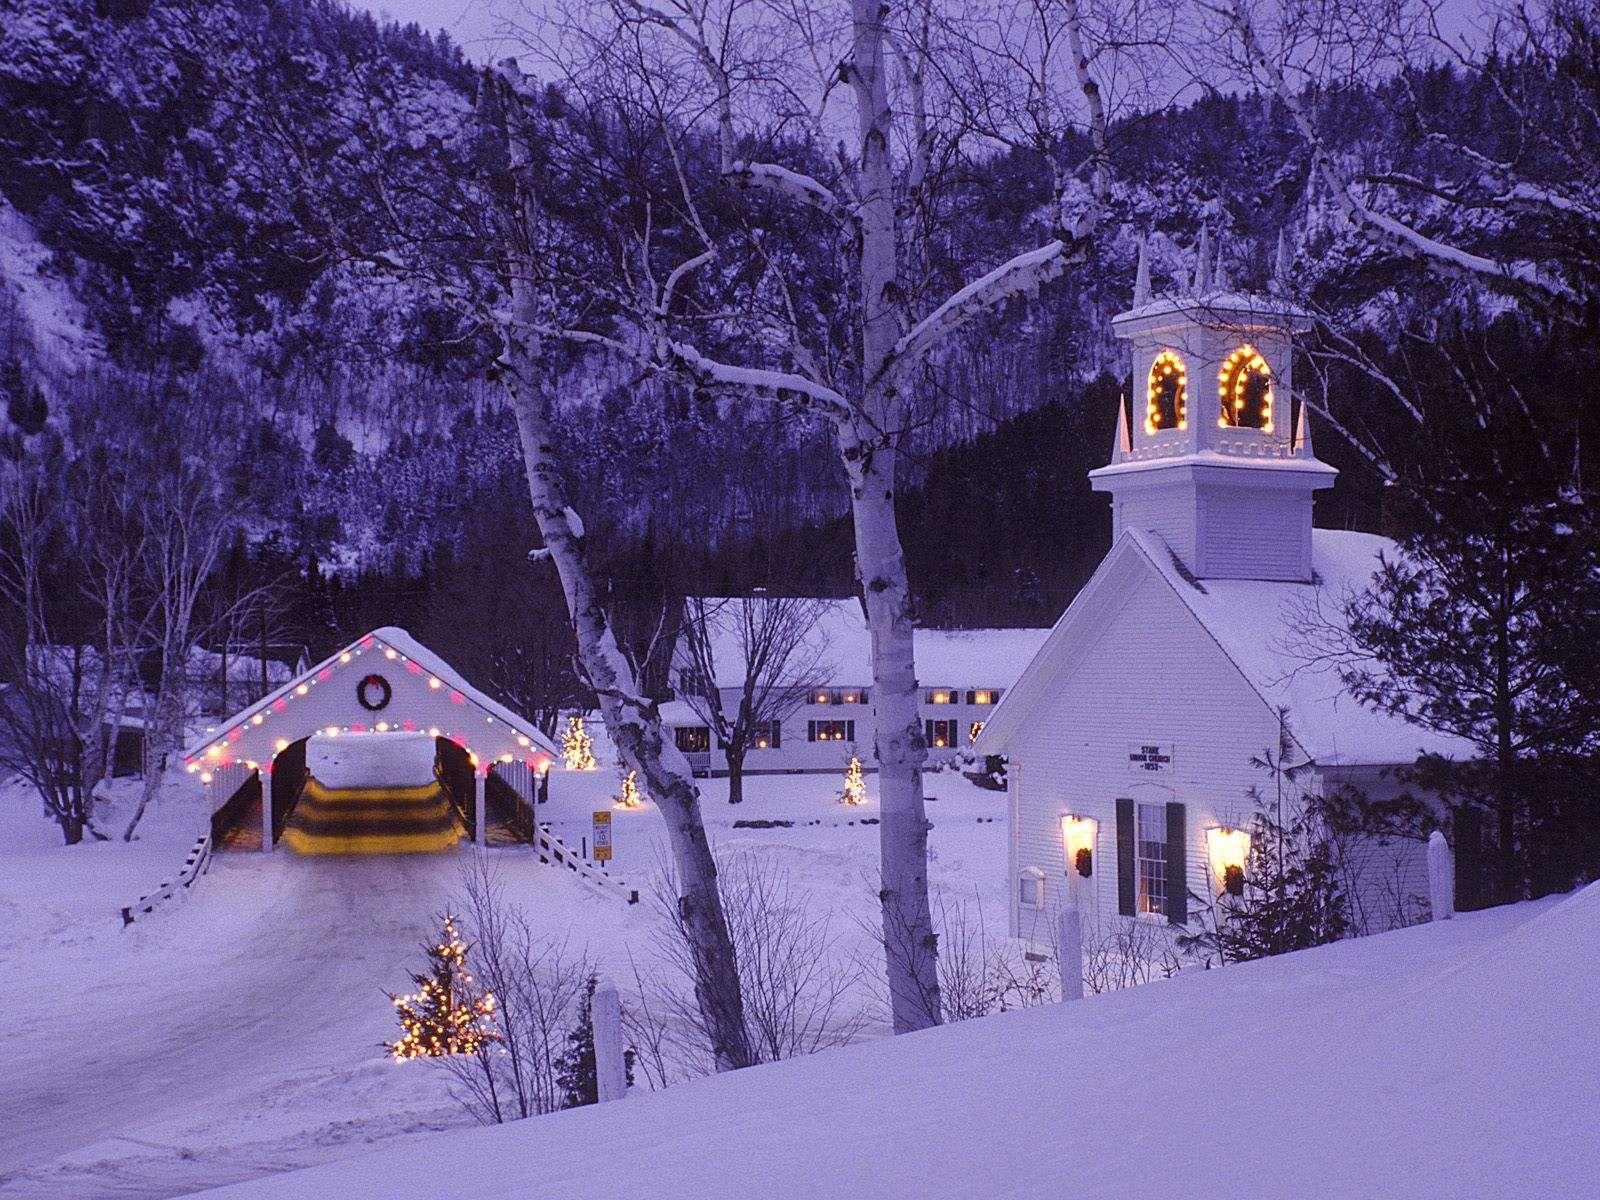 Beautiful Snow Scenes at Christmas. Free